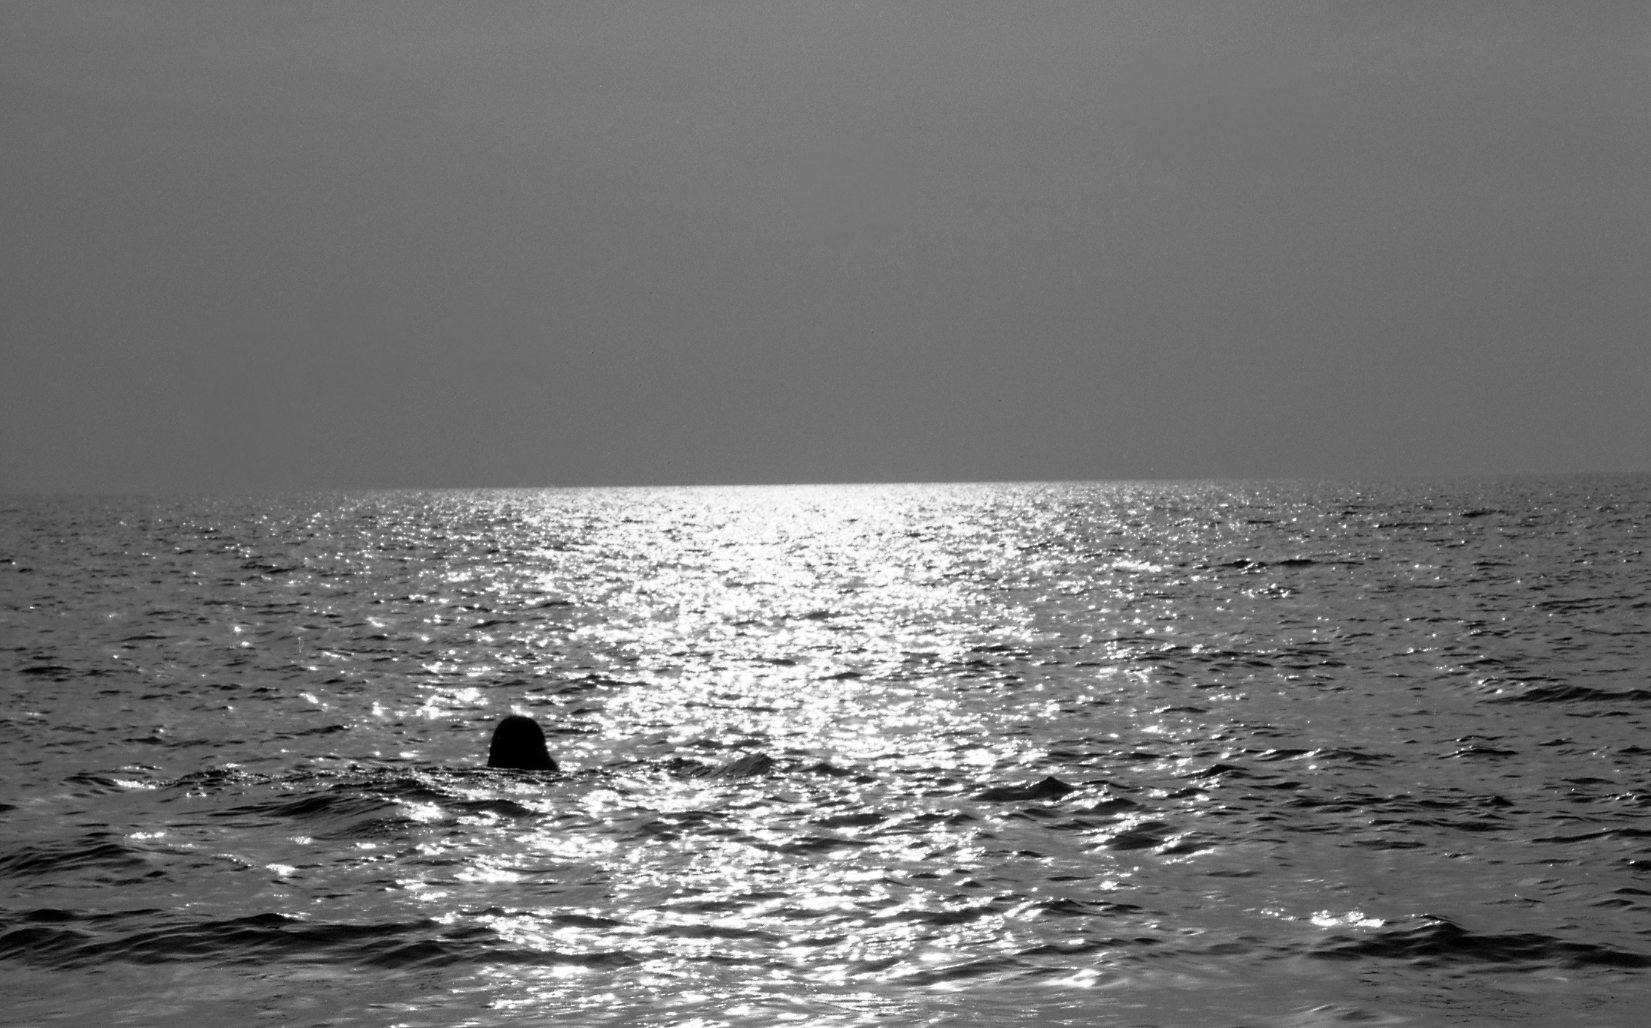 Robin Rice Black and White Photograph - Woman Swimming, Cala Violina, Grosseto, Italy, 2002